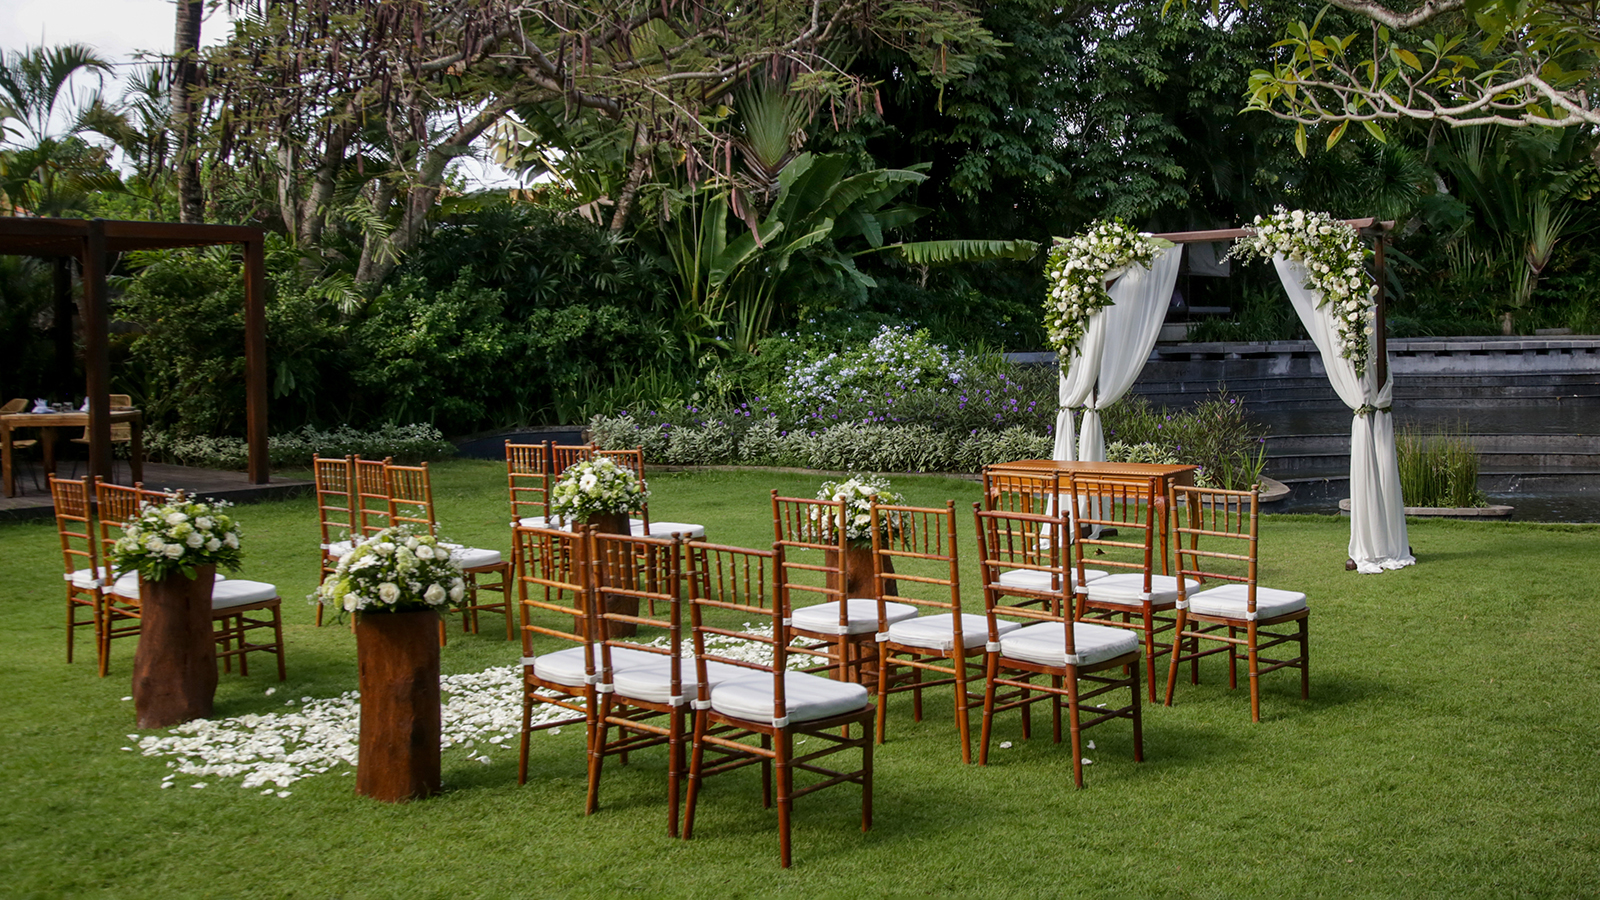 Beautiful romantic outdoor wedding setup in tropical garden, woo